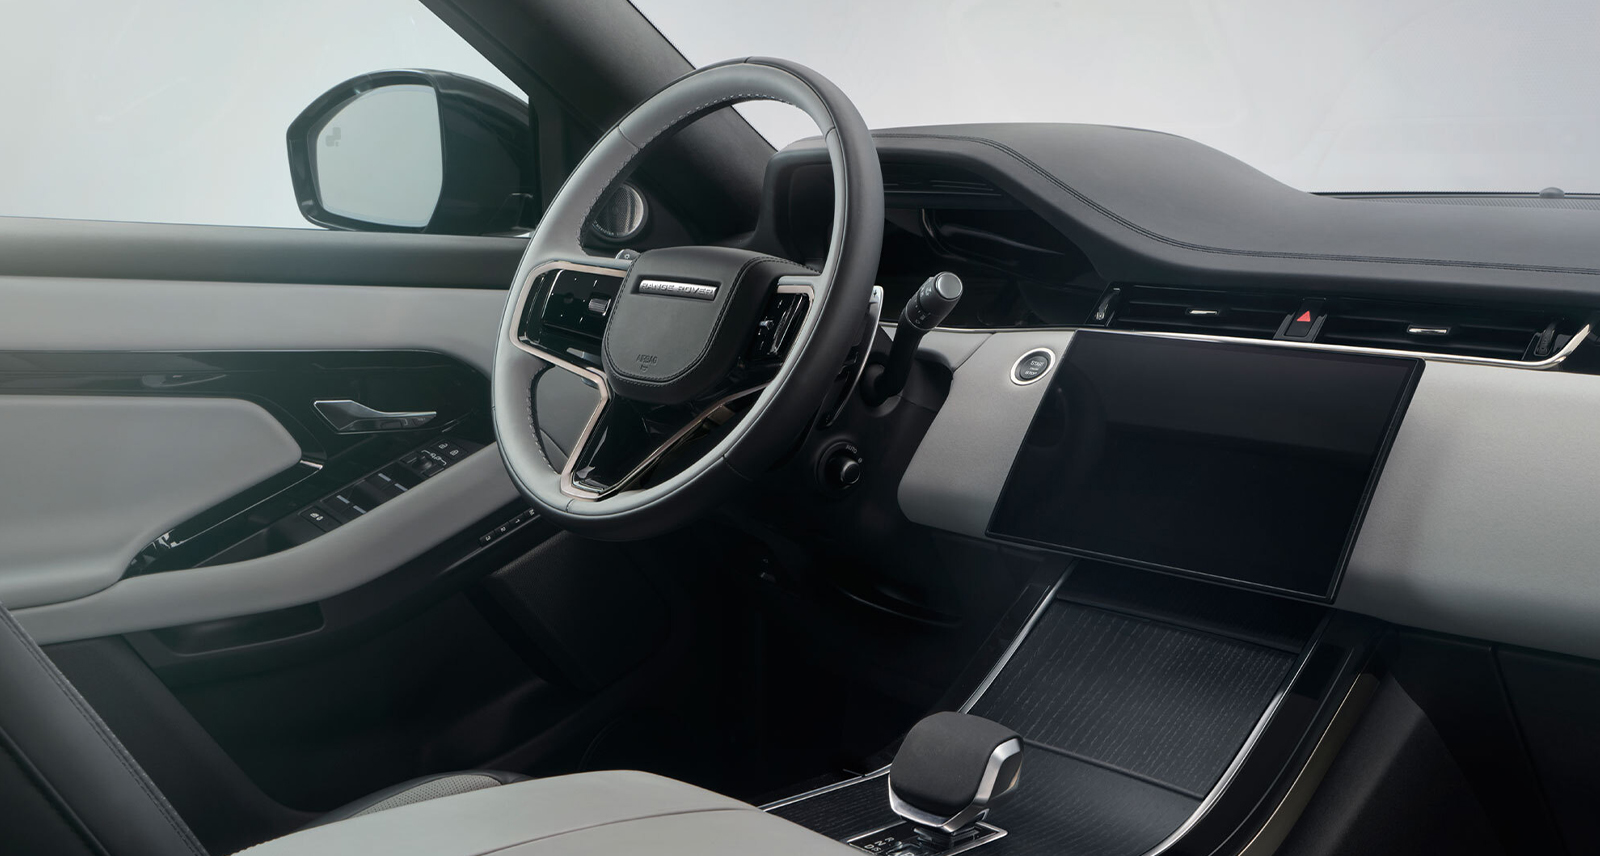 Contemporary Comfort sketch of inside the Range Rover Evoke